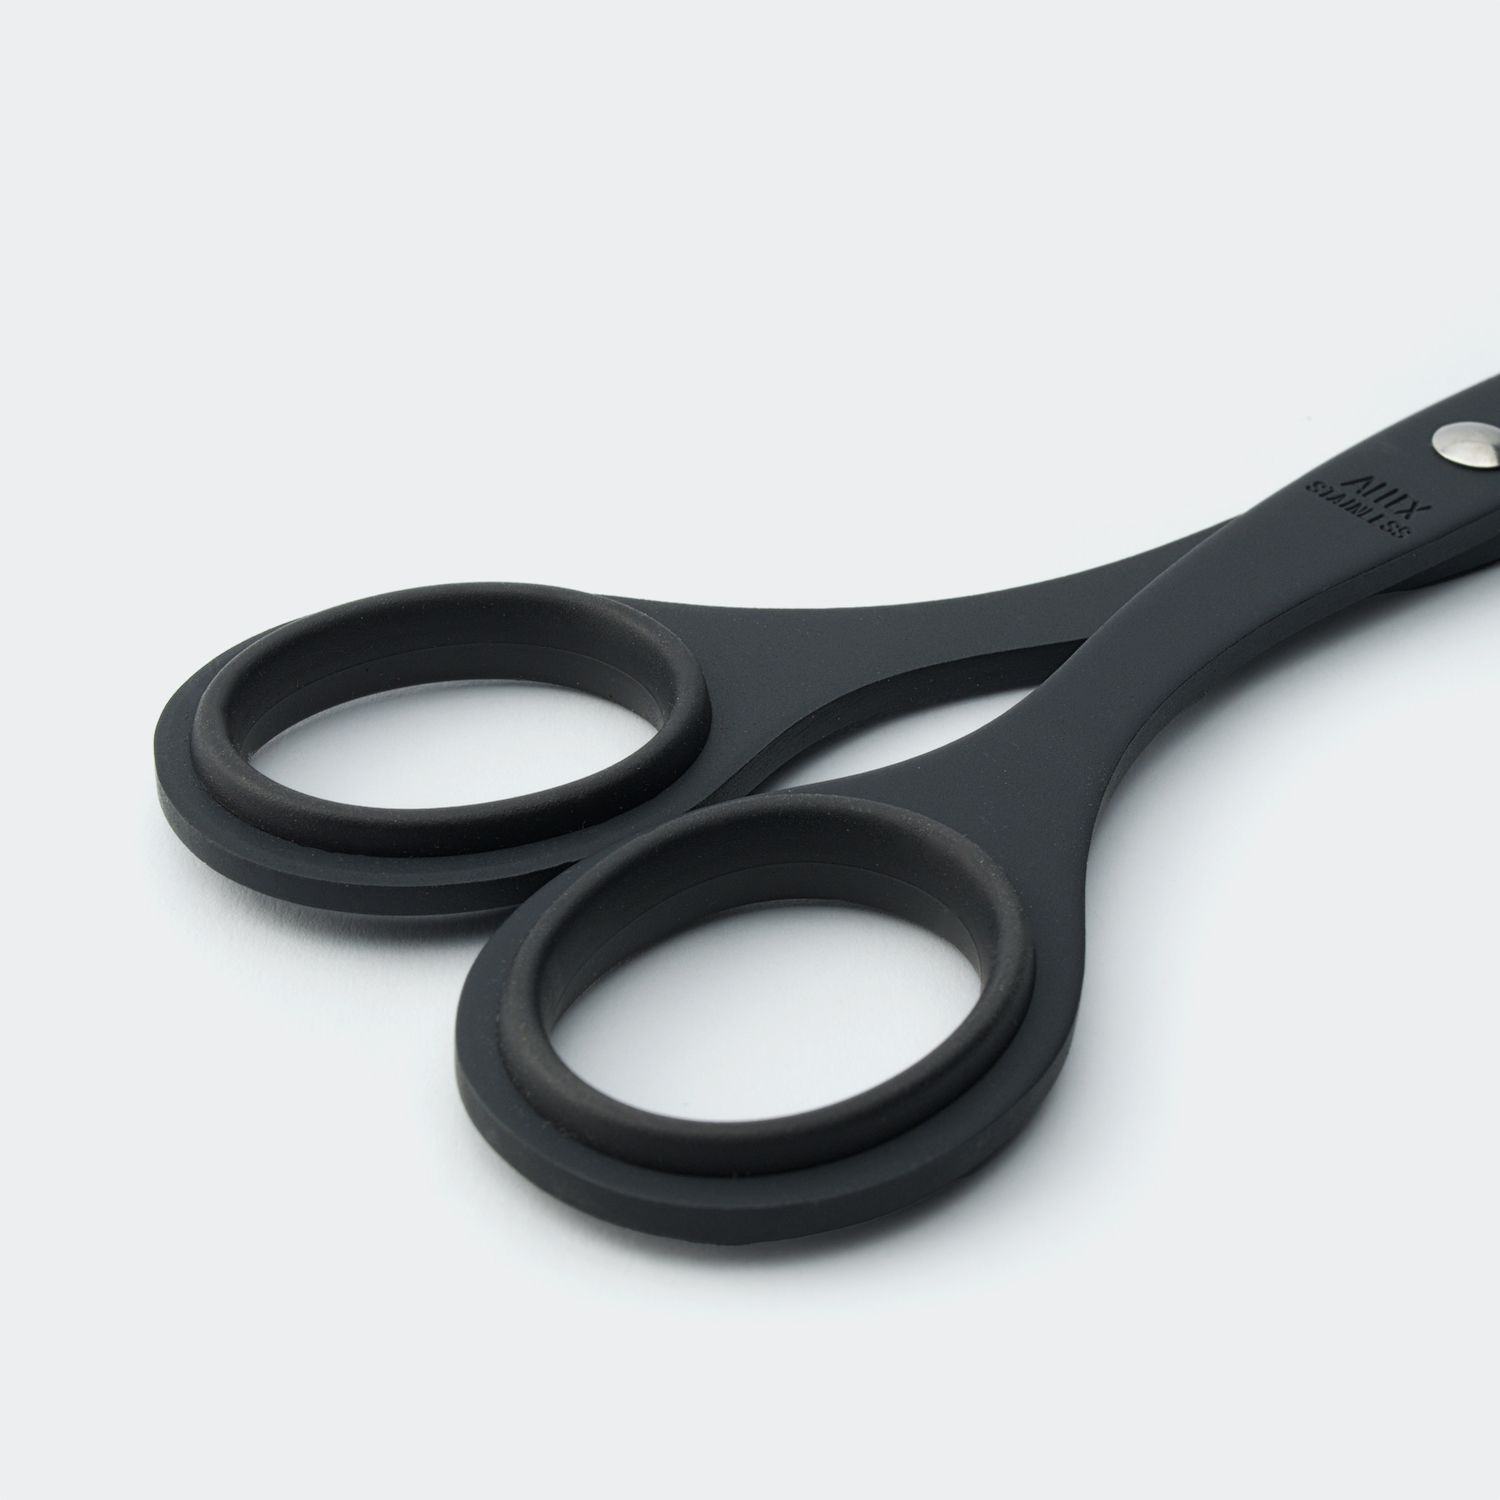 Allex Slim 100 Stainless Steel Scissors (Fluorine Coating) — The